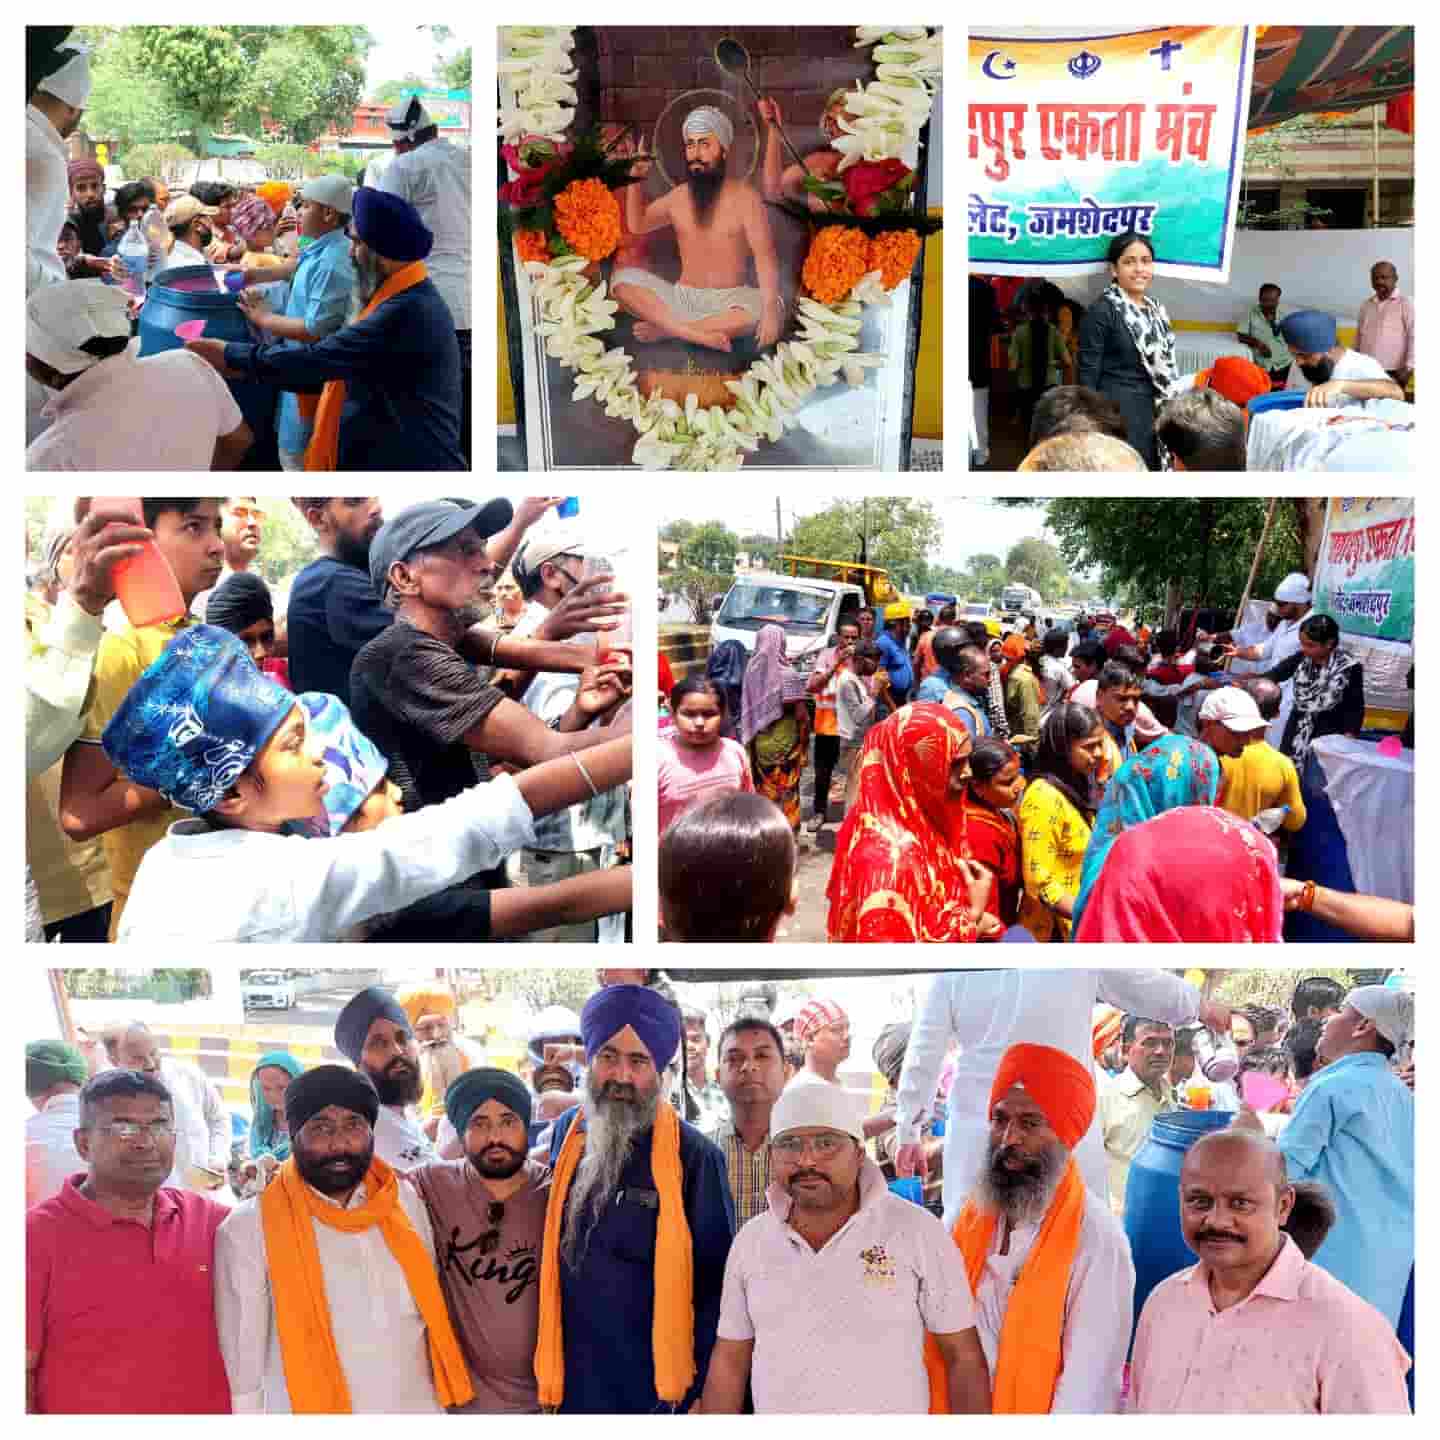 chhabeel 2 1 On Guru Arjun Dev Ji Town Post's martyrdom day, Jamshedpur Ekta Manch alleviates summer heat with Chhabil, honoring his teachings through humanitarian service.